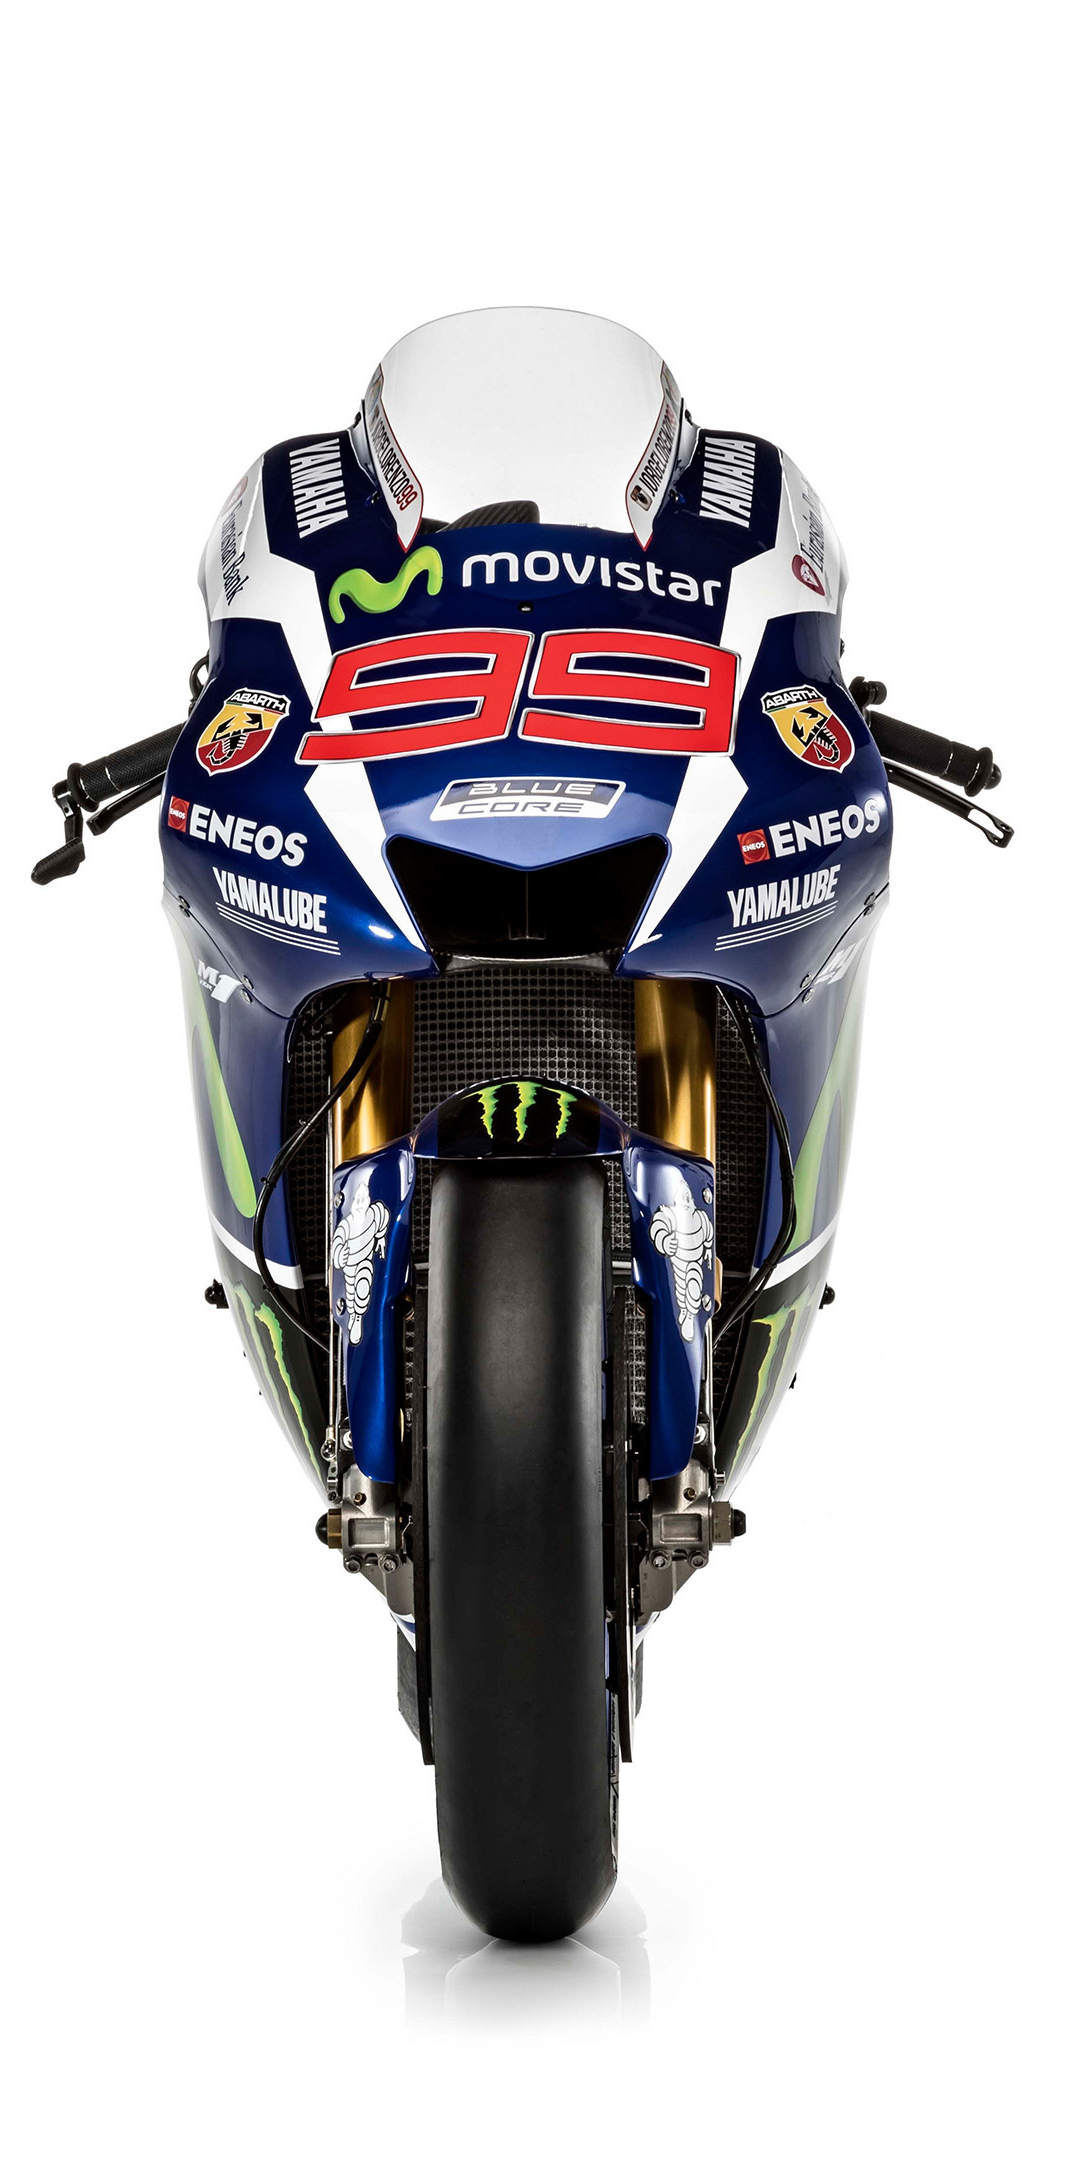 Motogp, race bike, Yamaha YZR-M1, 1080x2160 wallpaper